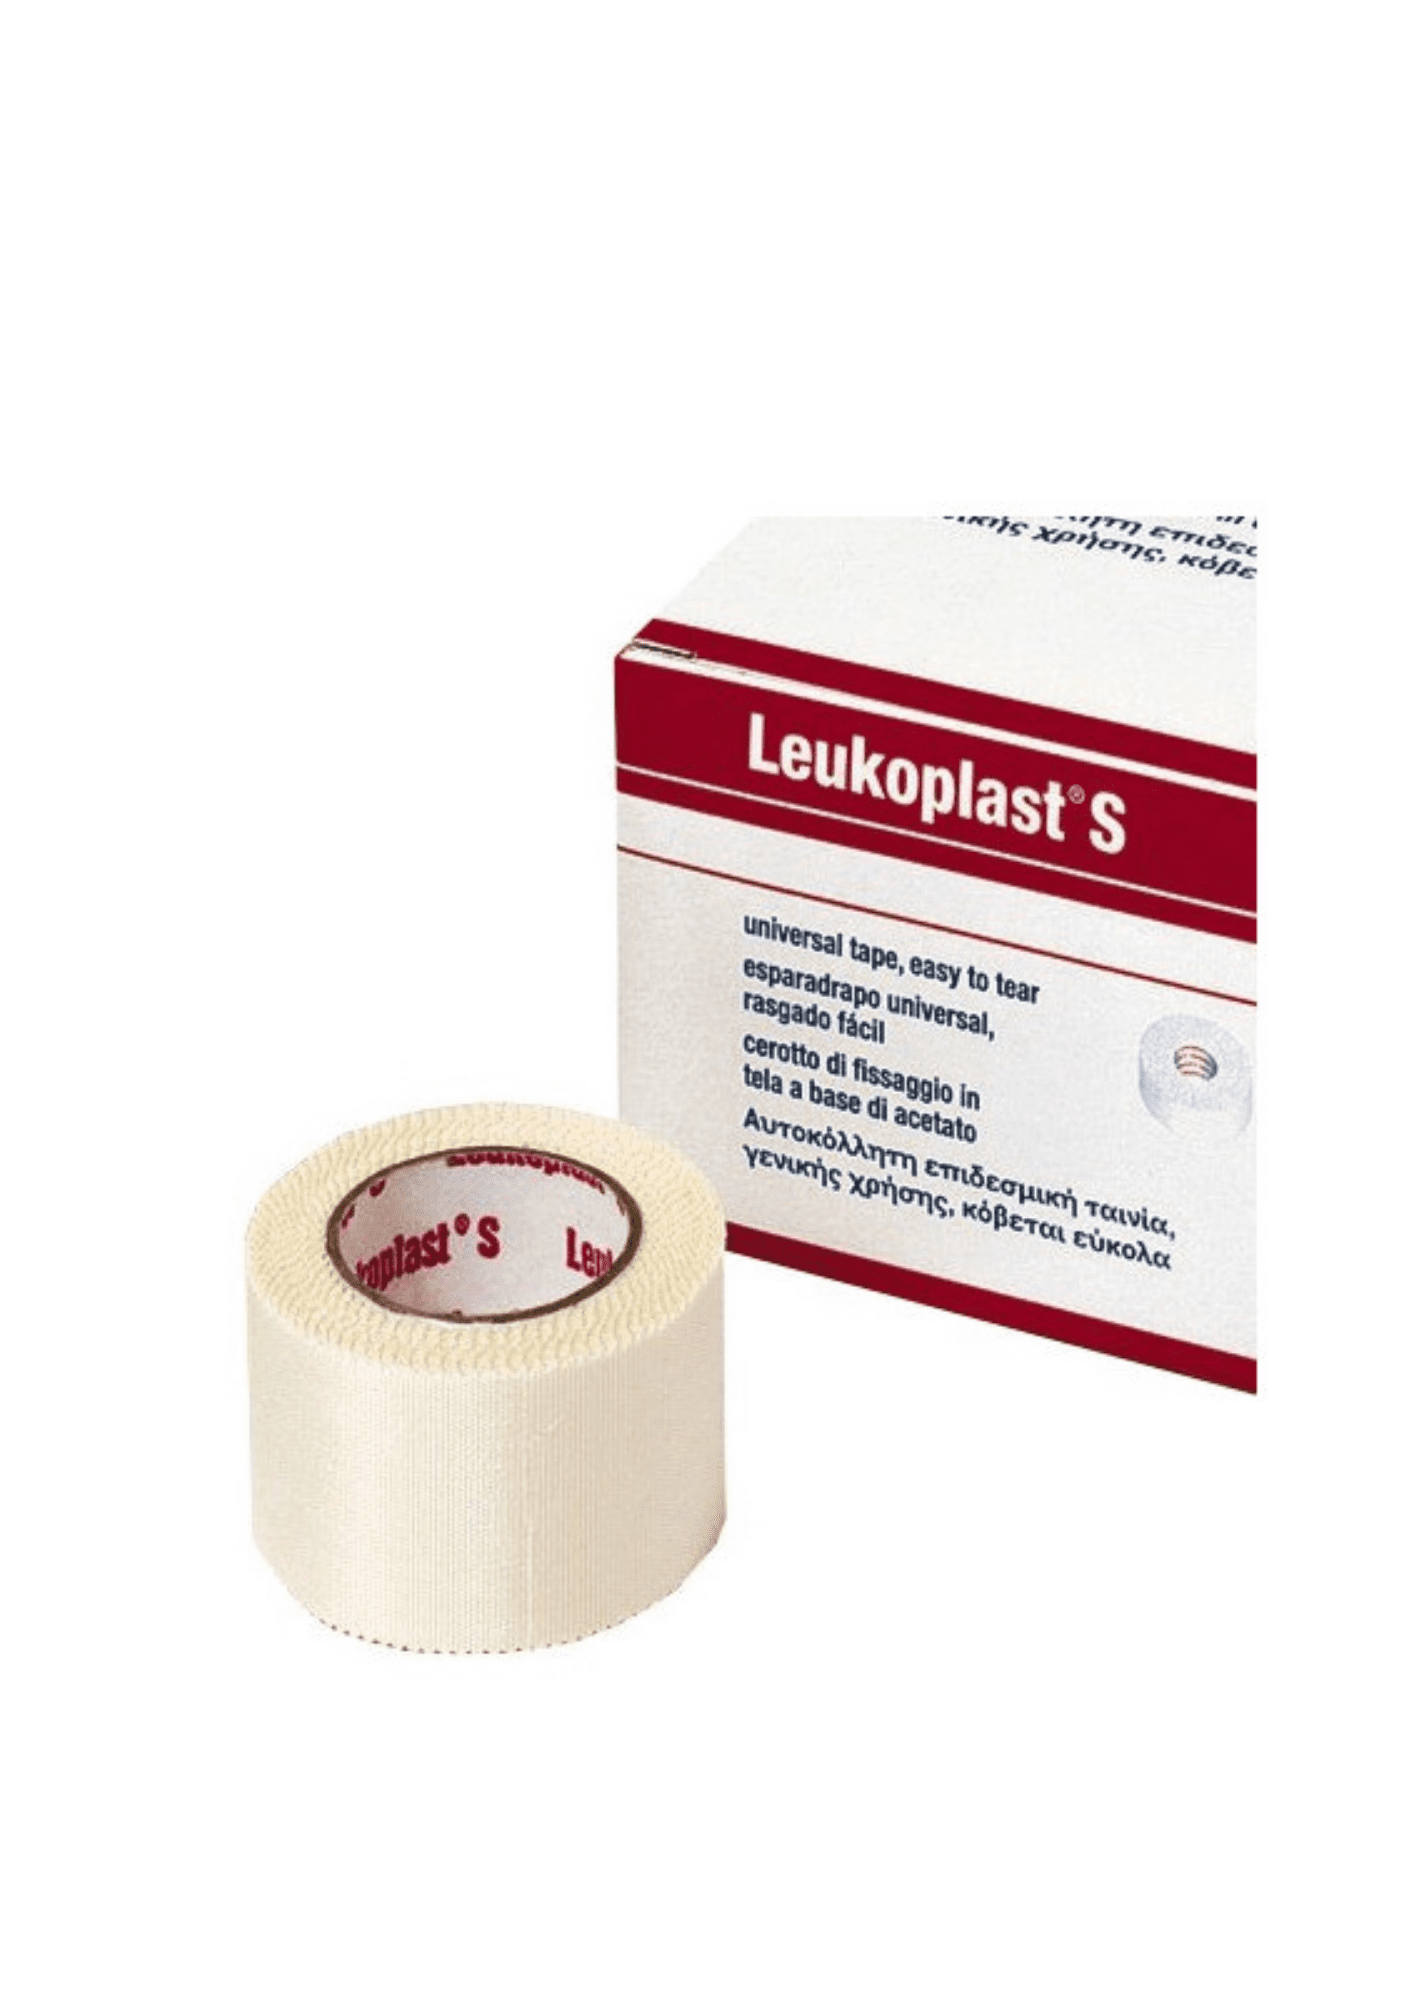 LEUKOPLAST esparadrapo blanco de 10cm x 5mts (3 unidades)